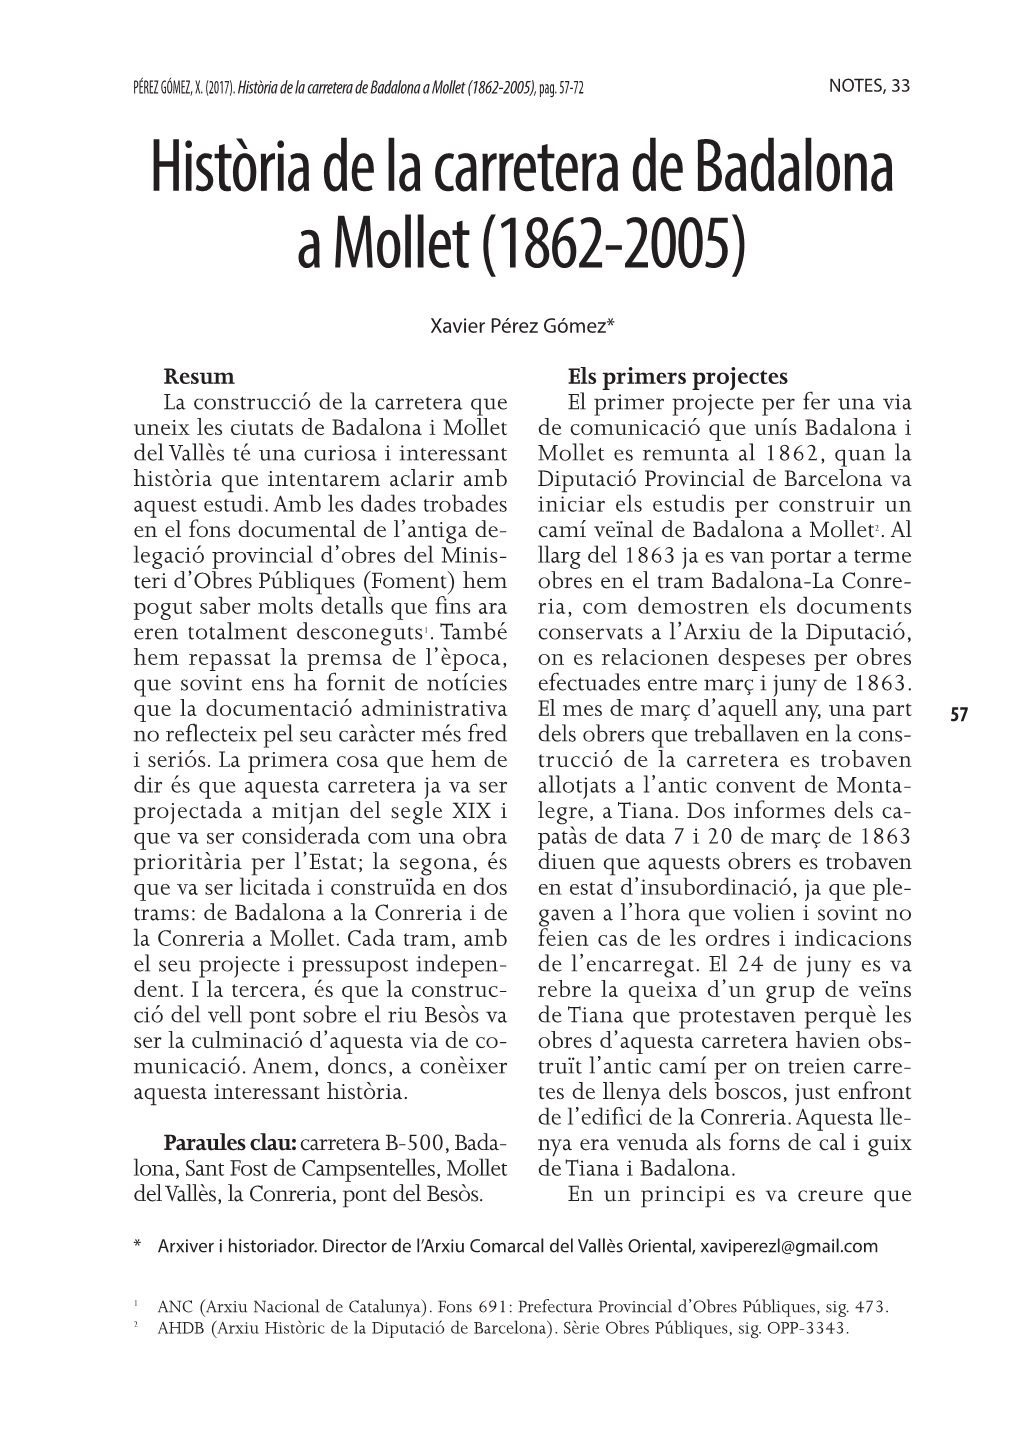 Història De La Carretera De Badalona a Mollet (1862-2005), Pag